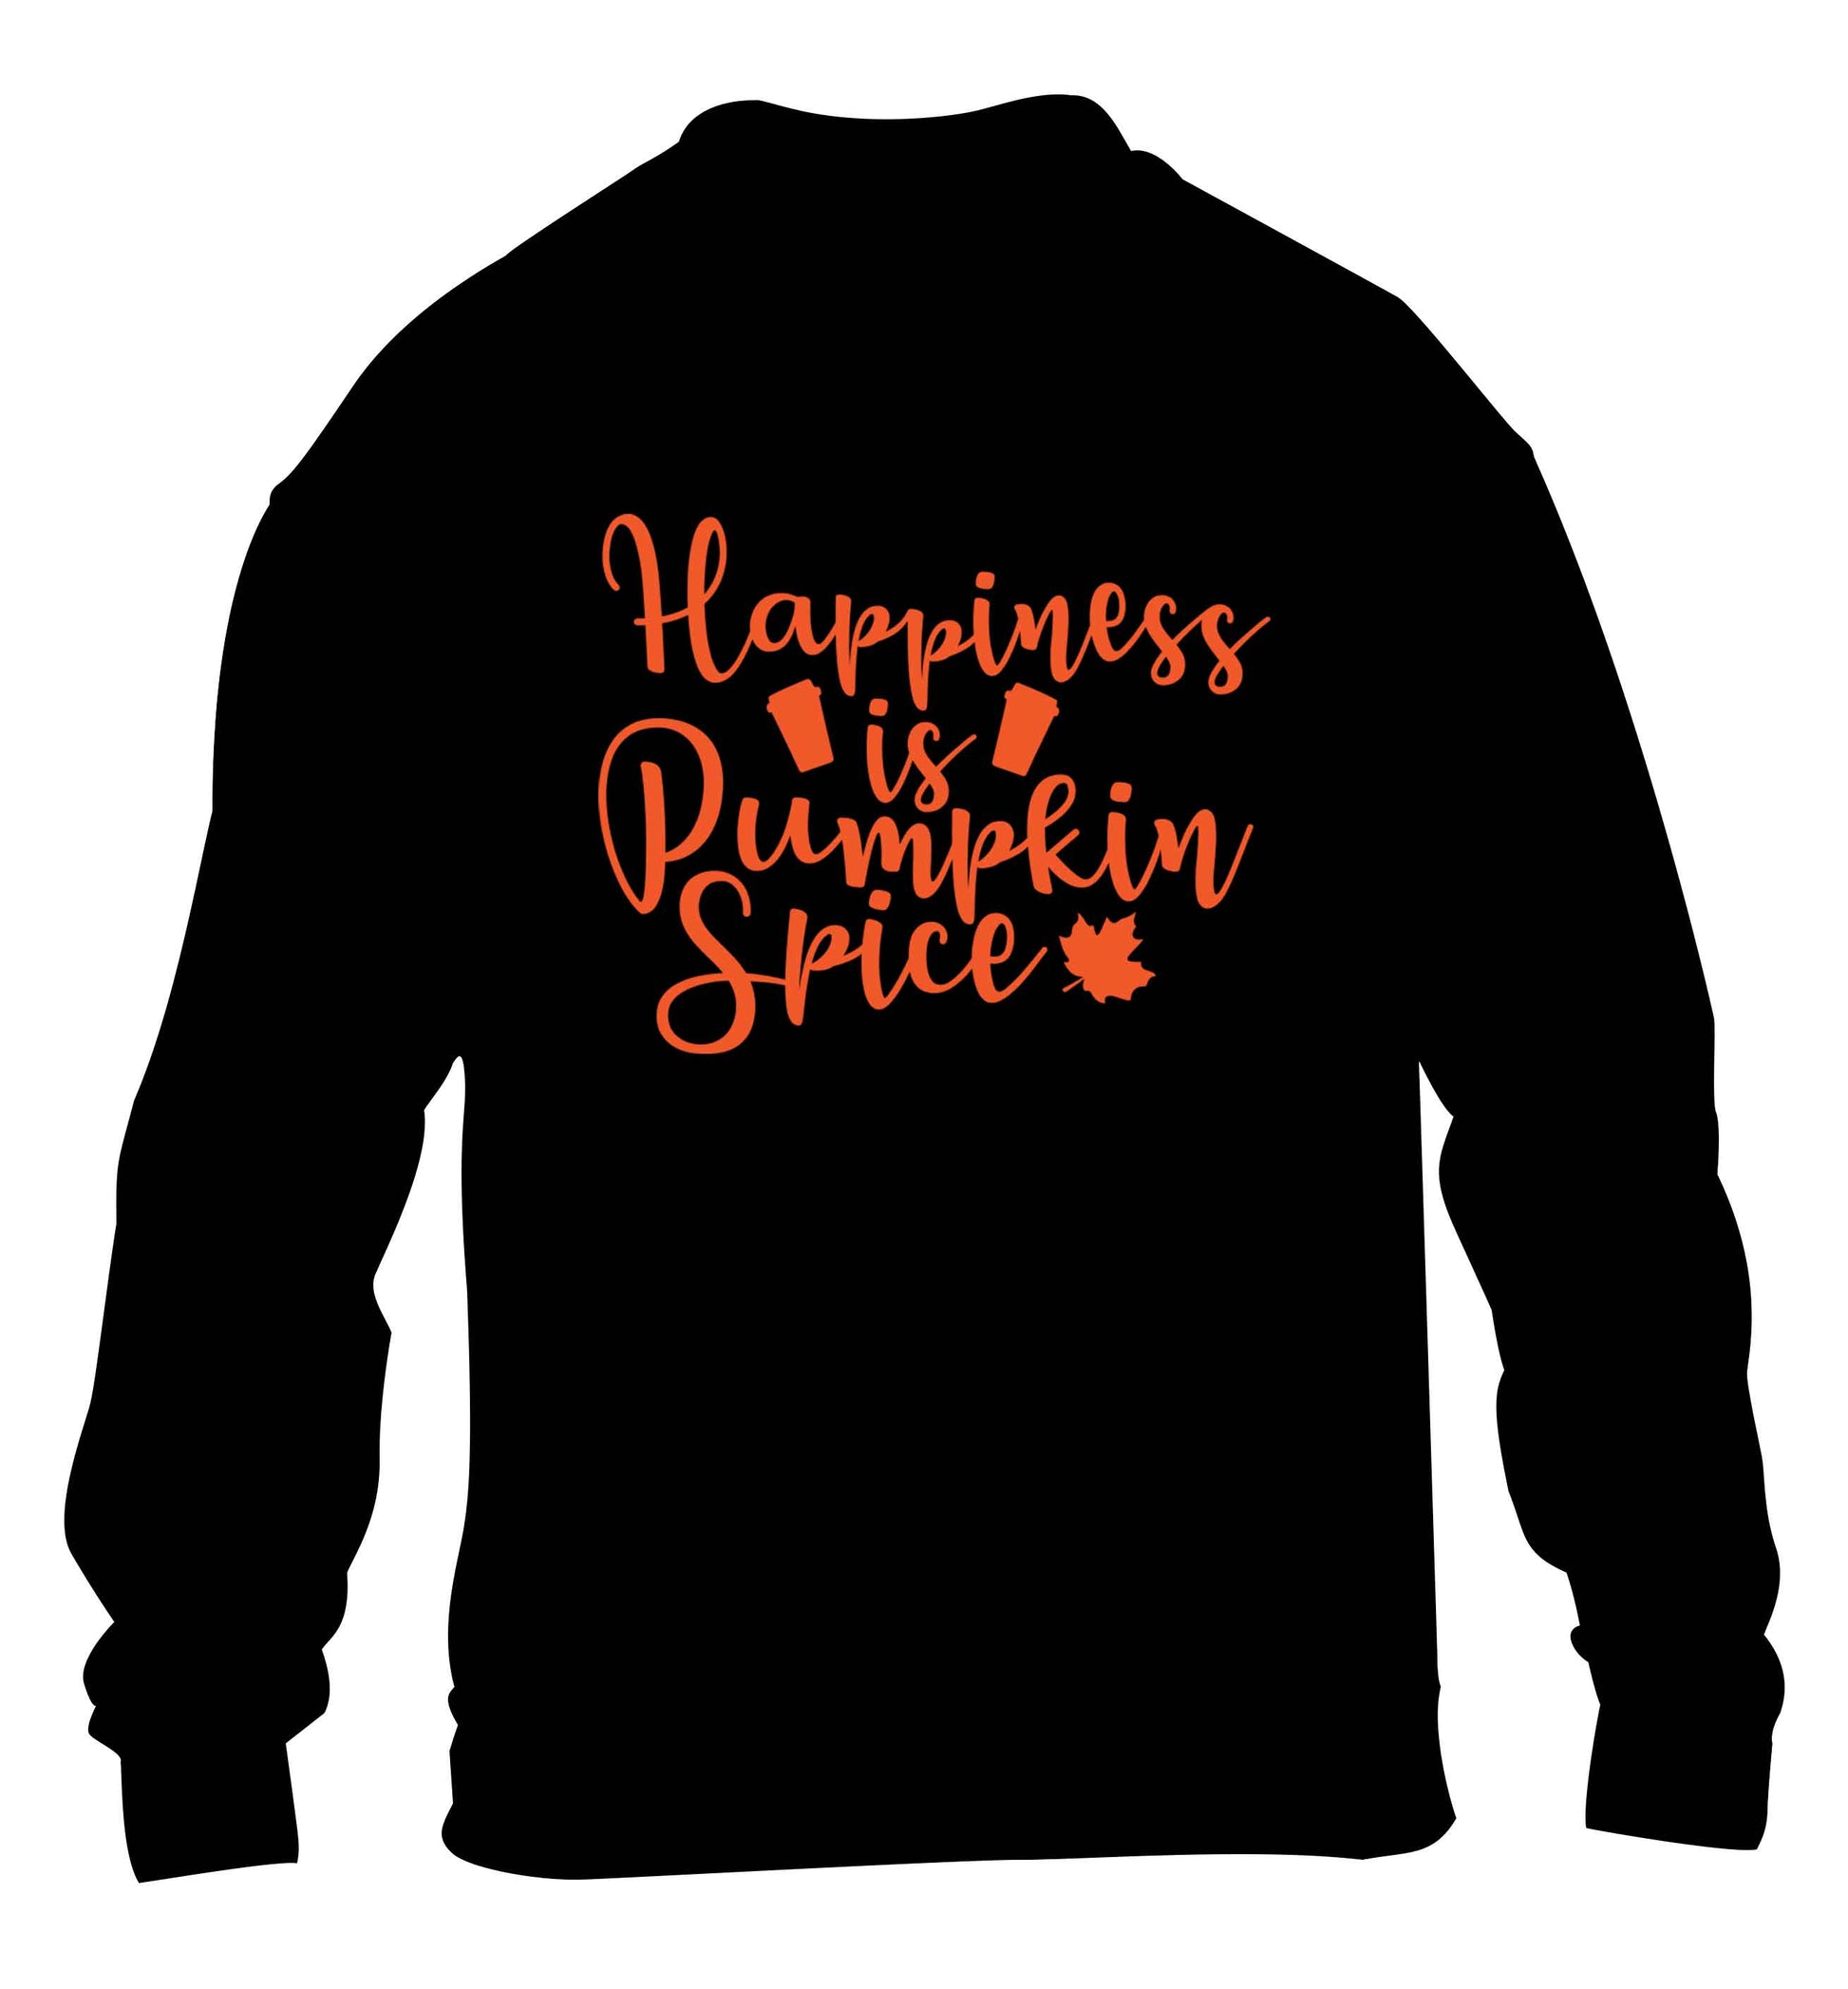 Happiness Pumpkin Spice children's black sweater 12-13 Years